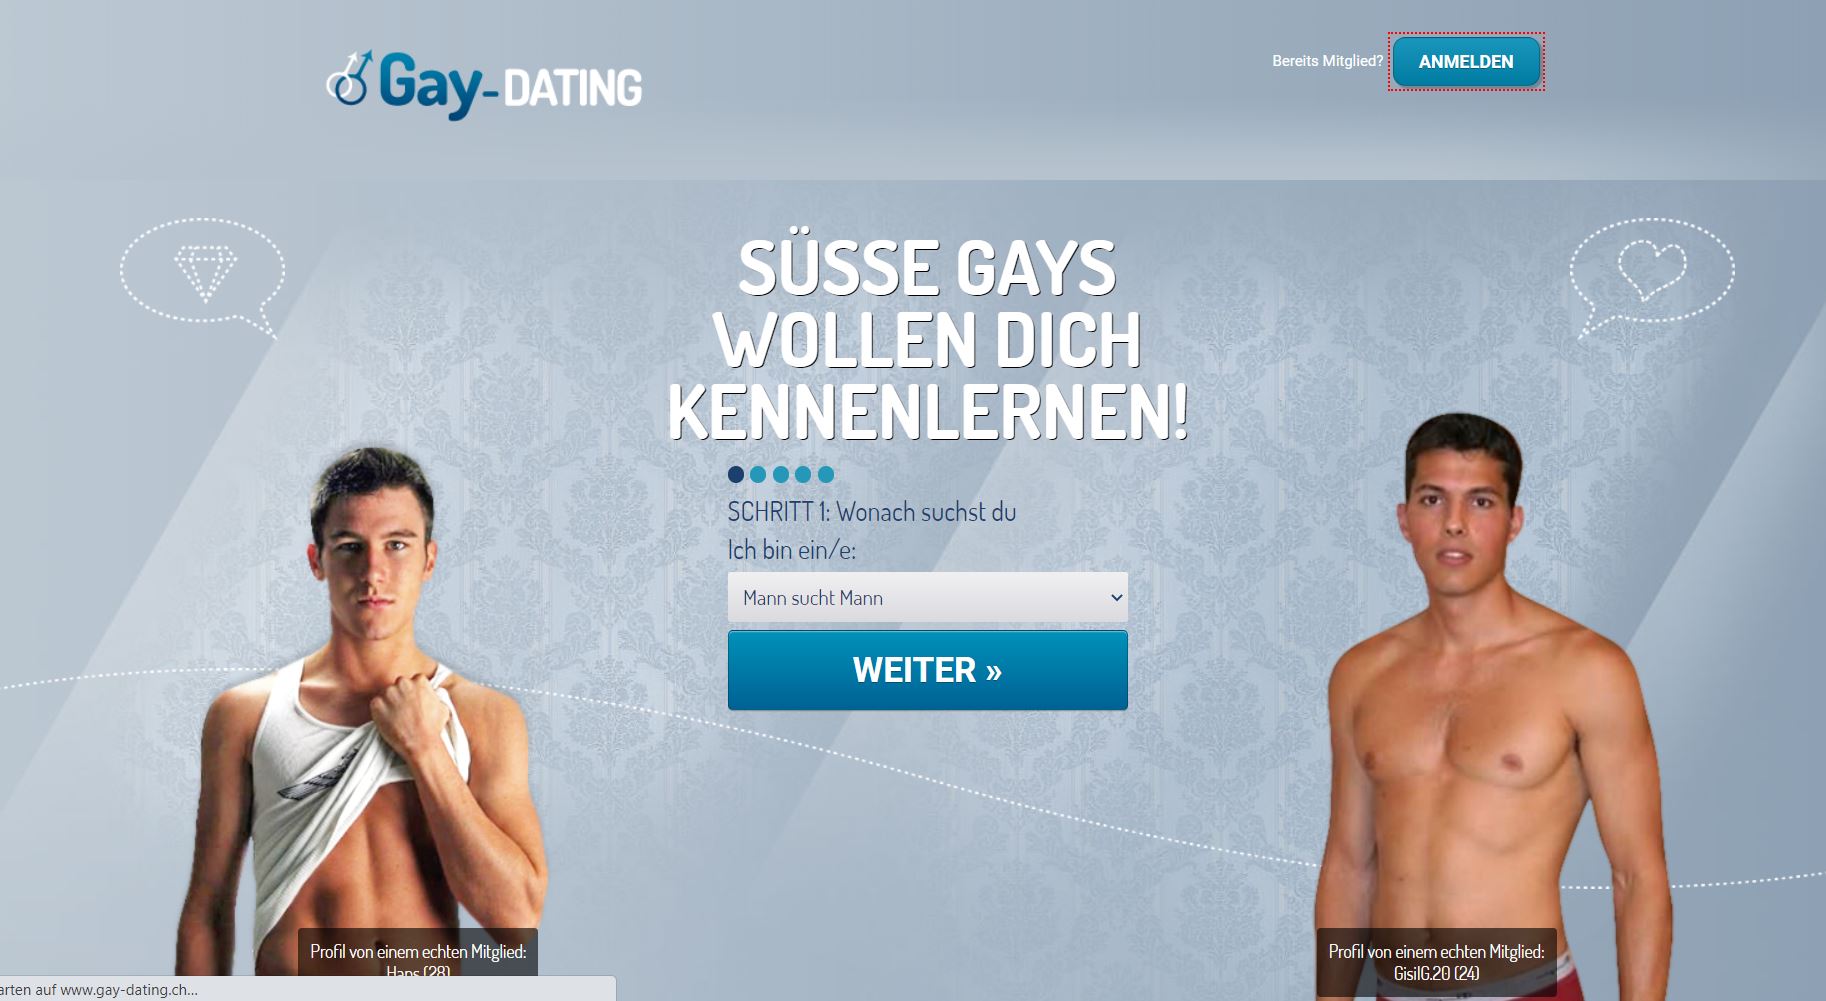 Testbericht - gay-dating.ch Abzocke